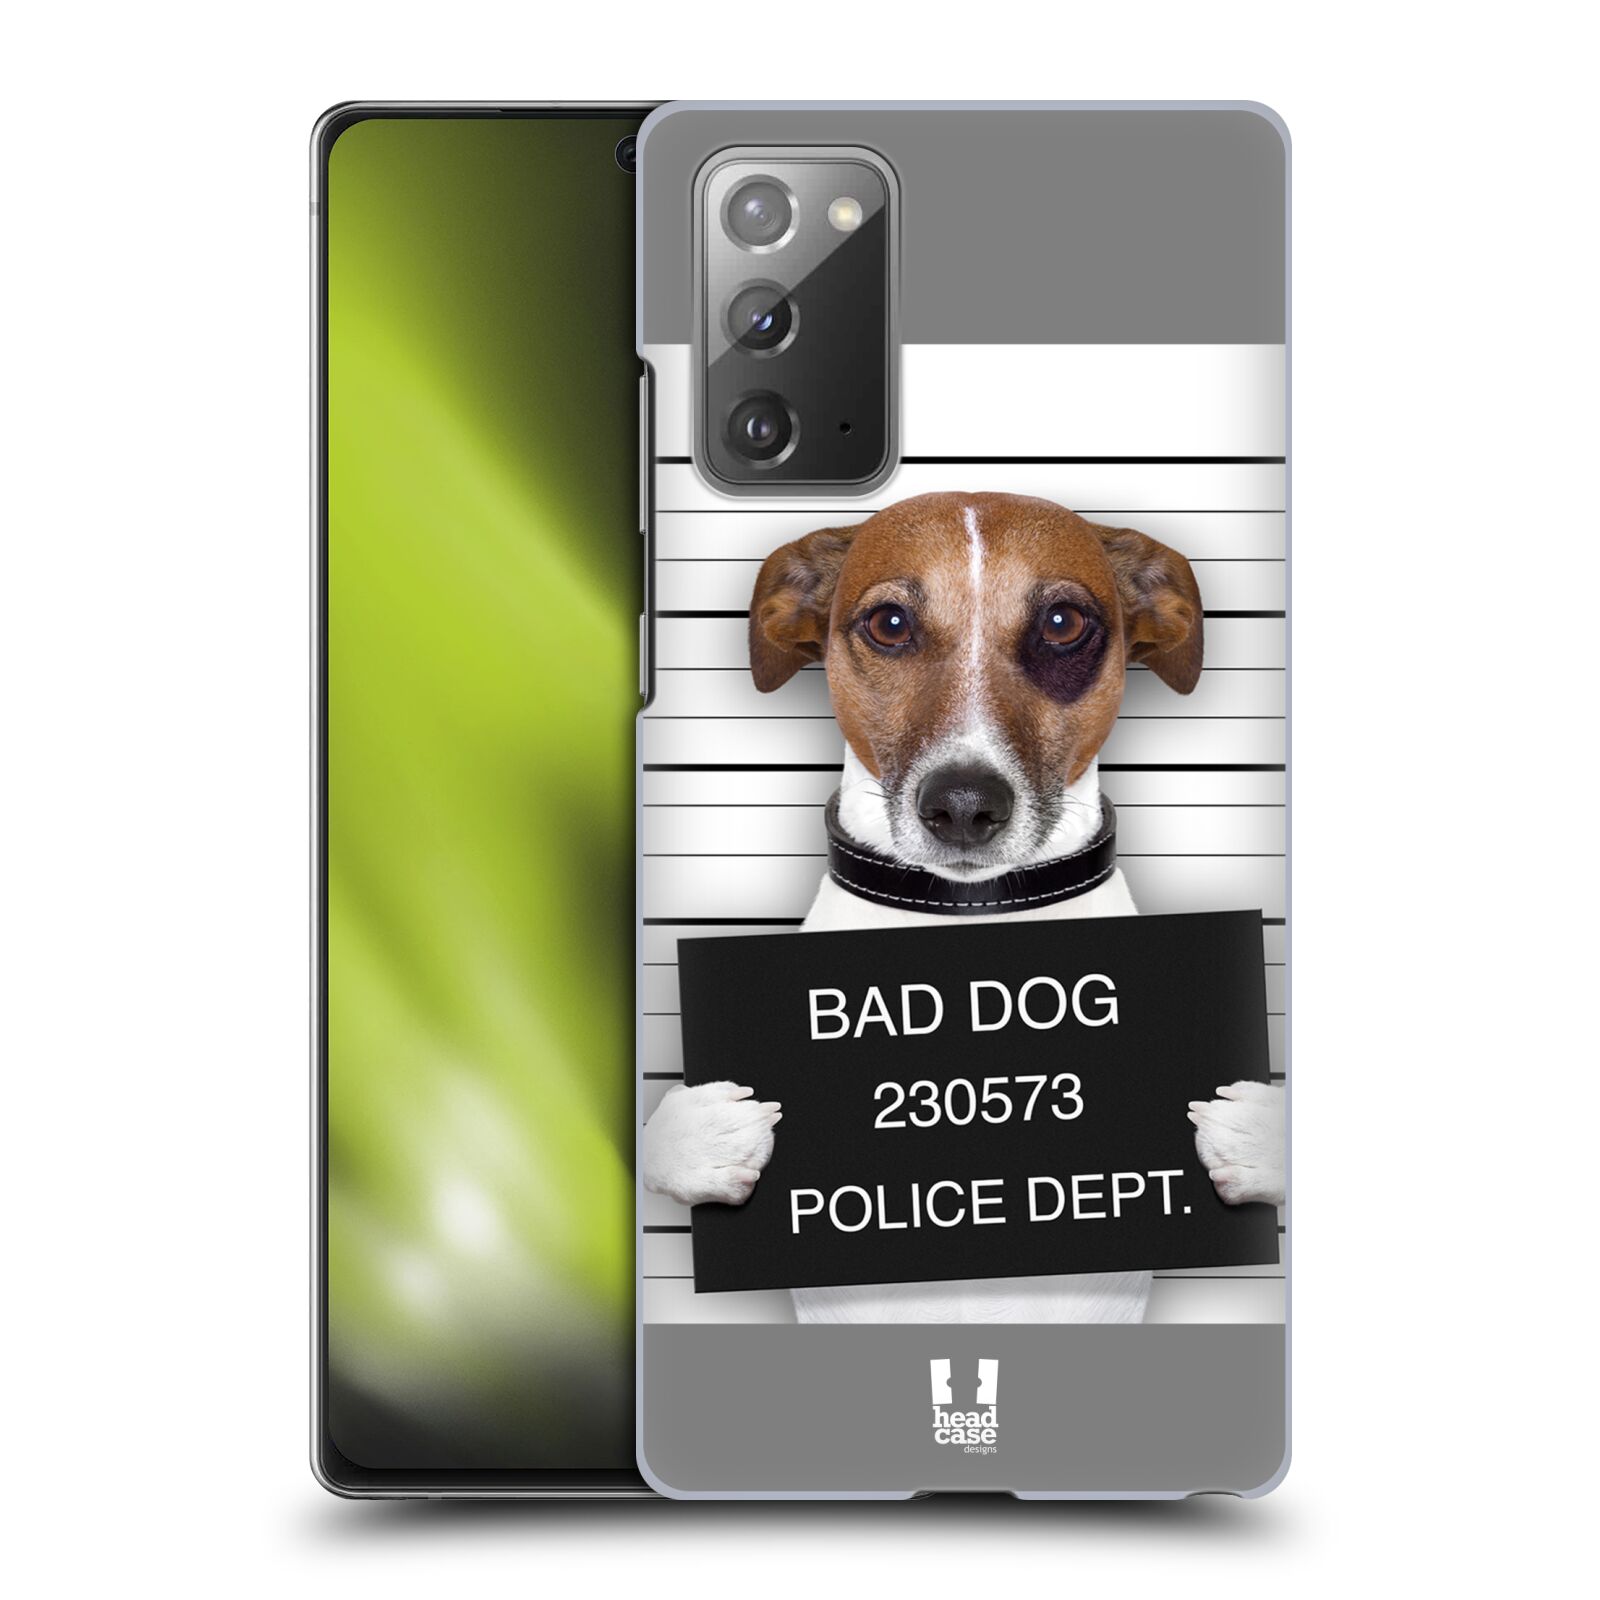 Plastový obal HEAD CASE na mobil Samsung Galaxy Note 20 vzor Legrační zvířátka pejsek na policii